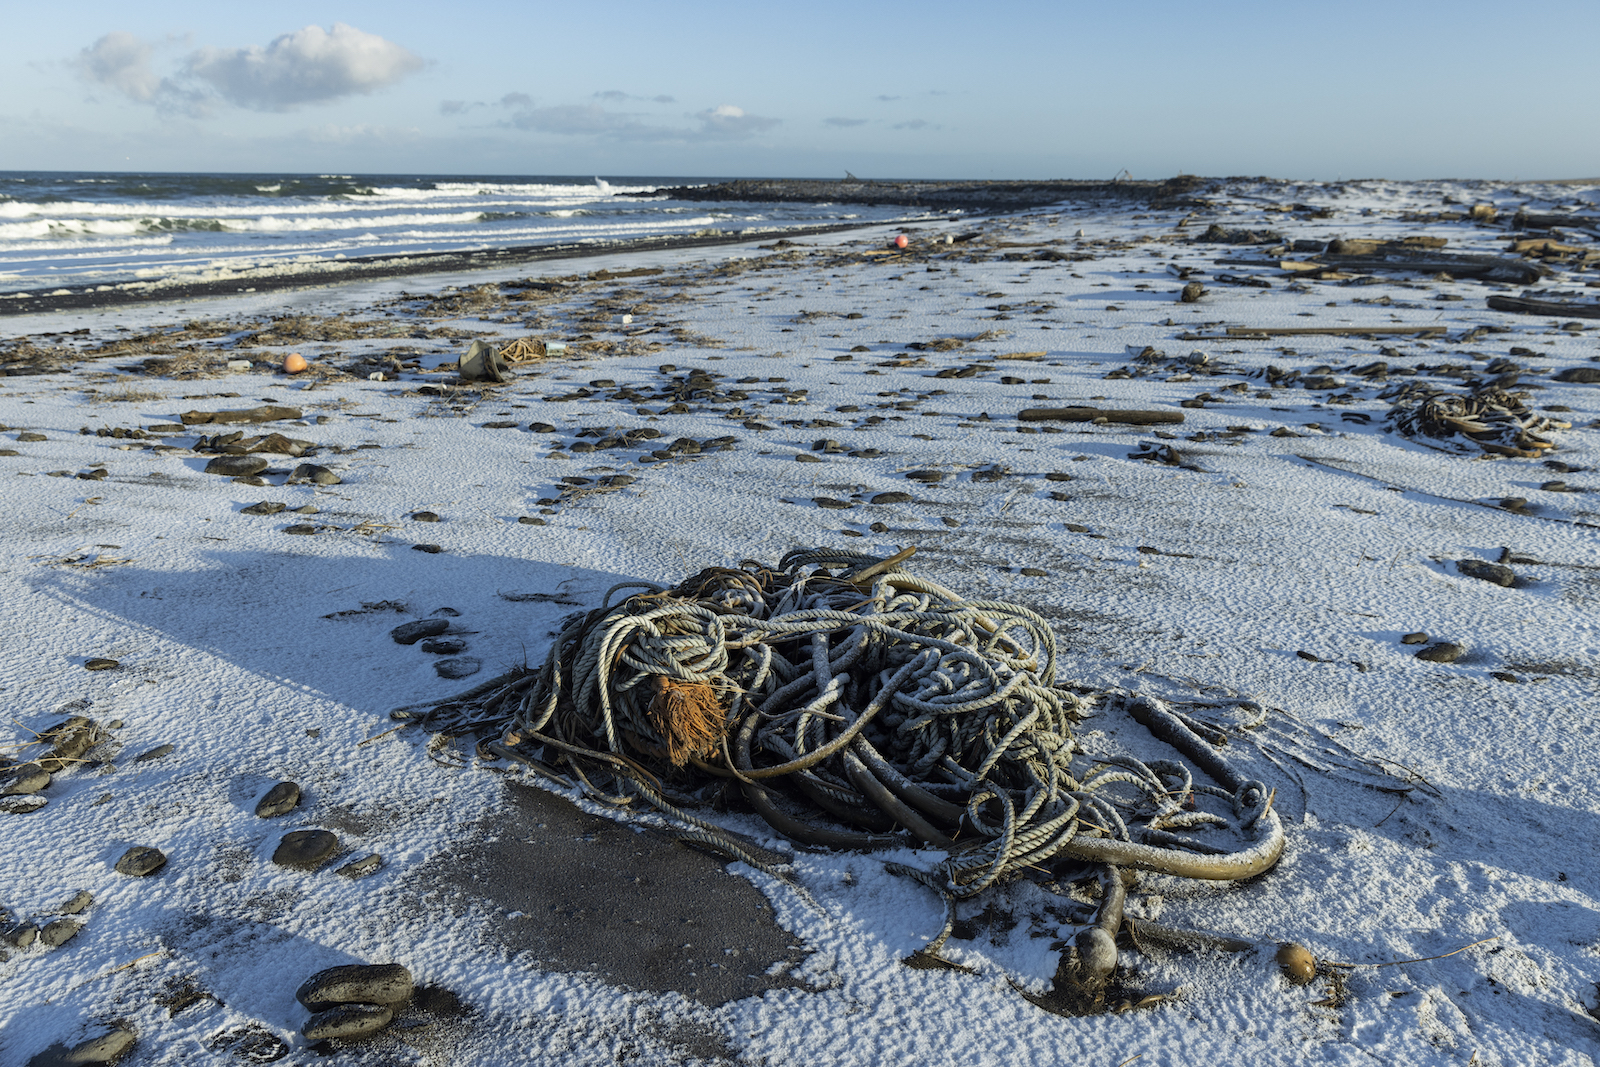 Marine debris sits on a snow-covered beach